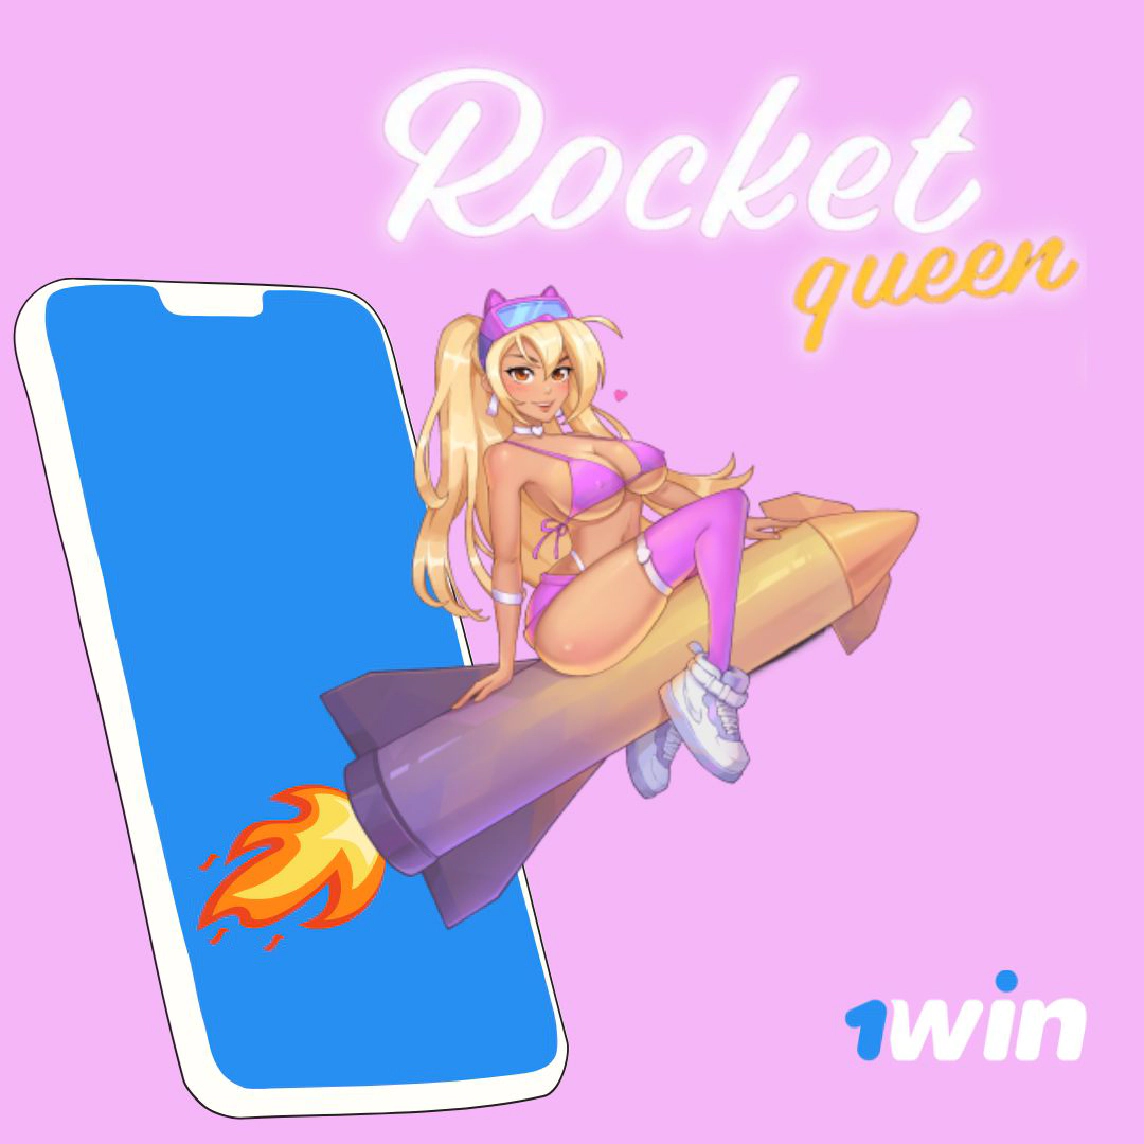 1win ক্যাসিনোতে Rocket Queen স্লট খেলা